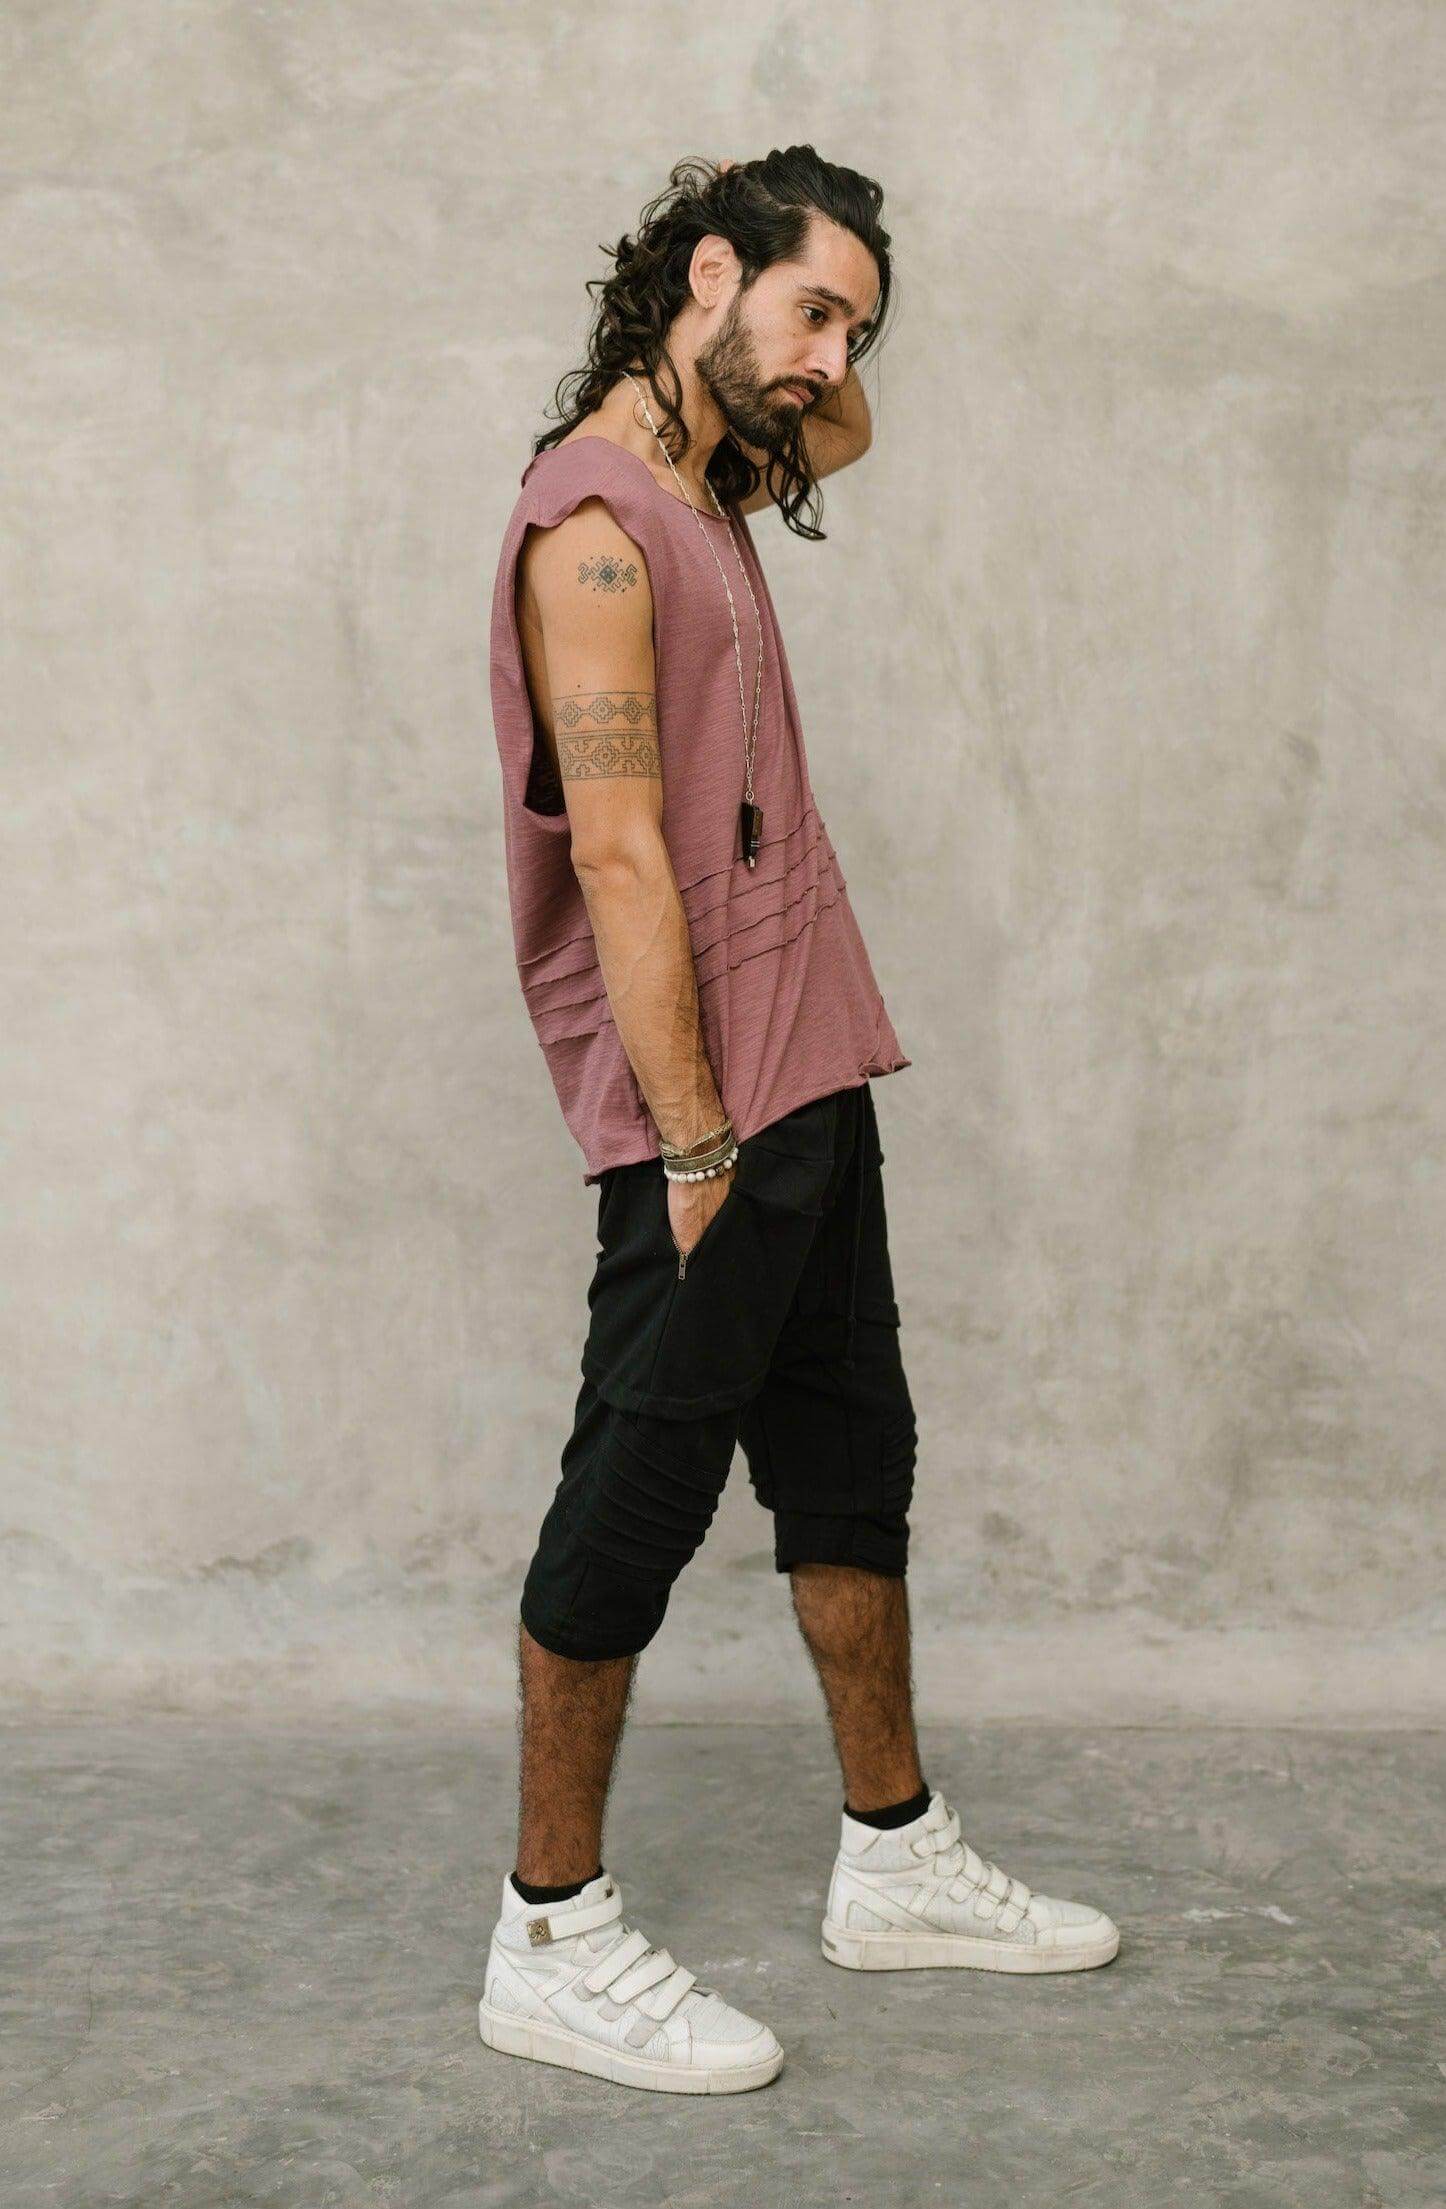 SAHARA Shorts - Comfy boho drop crotch cotton shorts with unique details - VALO Design Clothing 